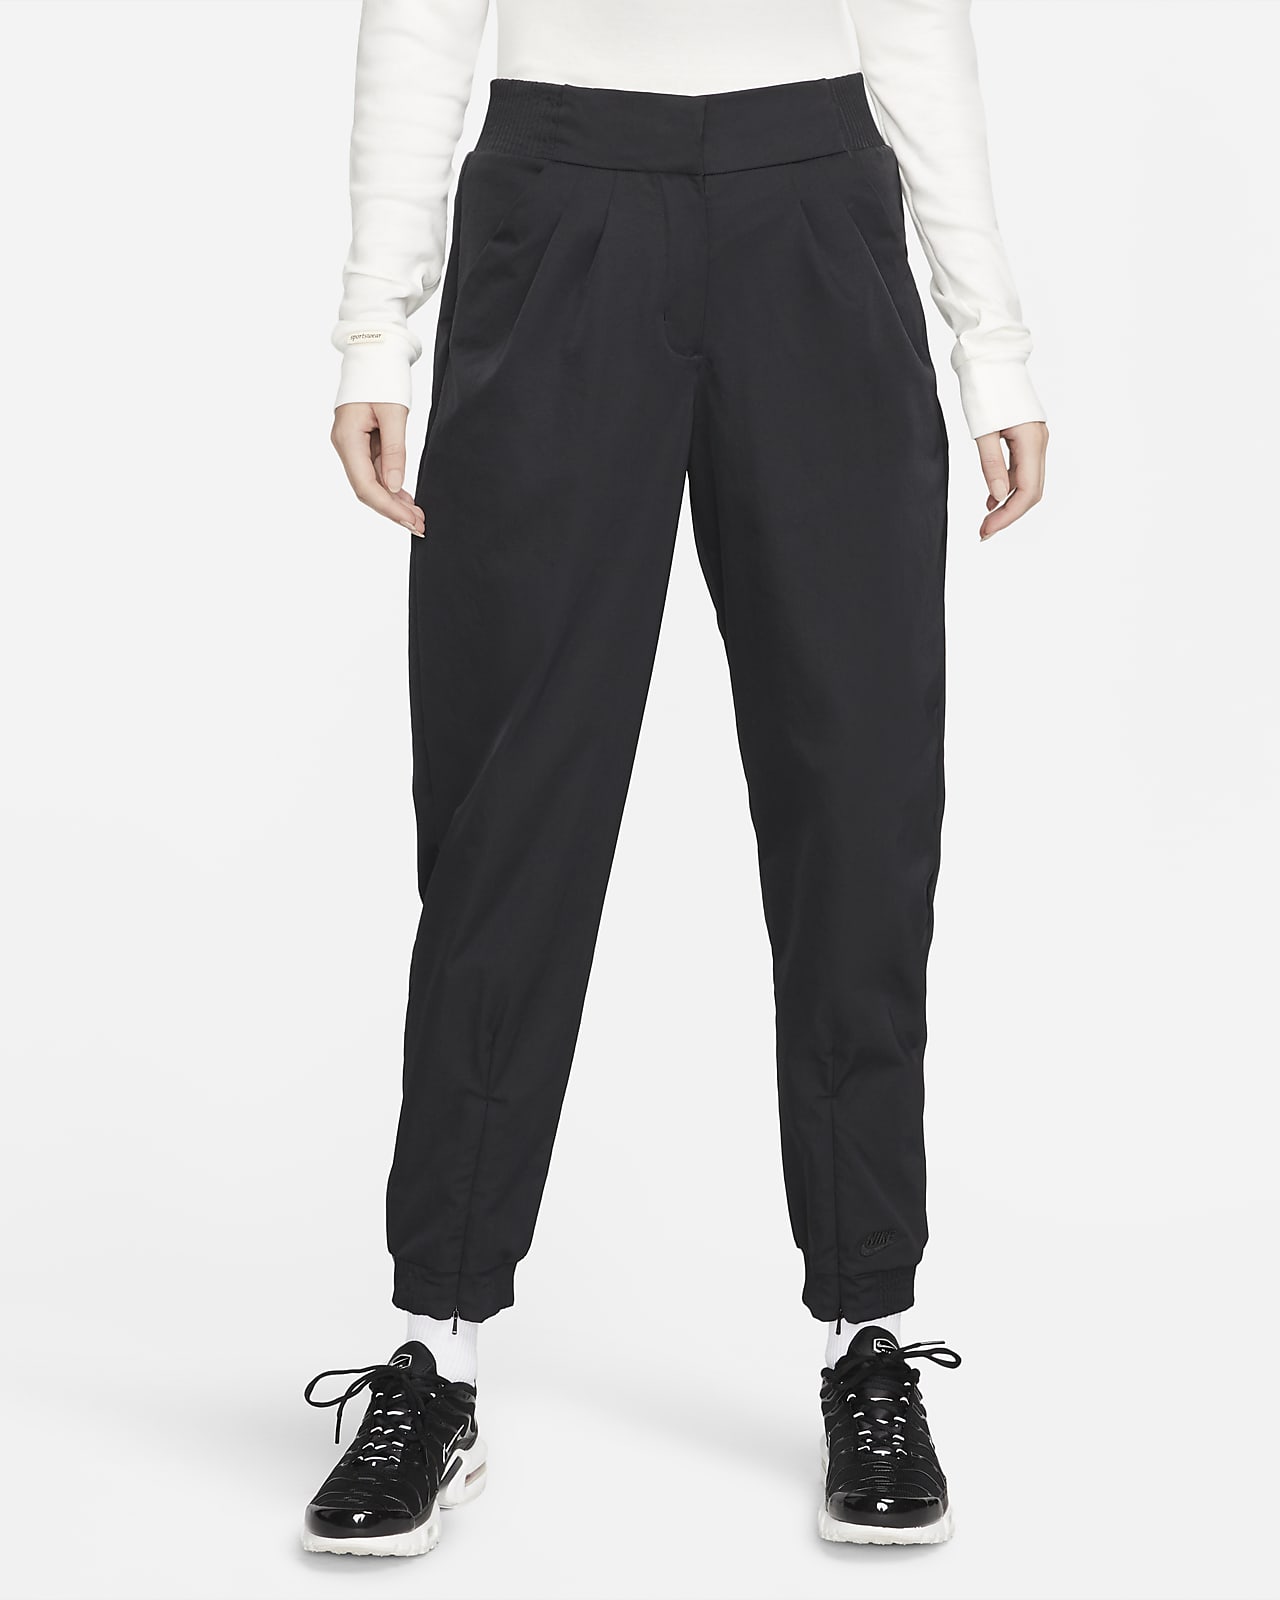 Nike Sportswear Dri-FIT Tech Pack Damenhose mit hohem Bund